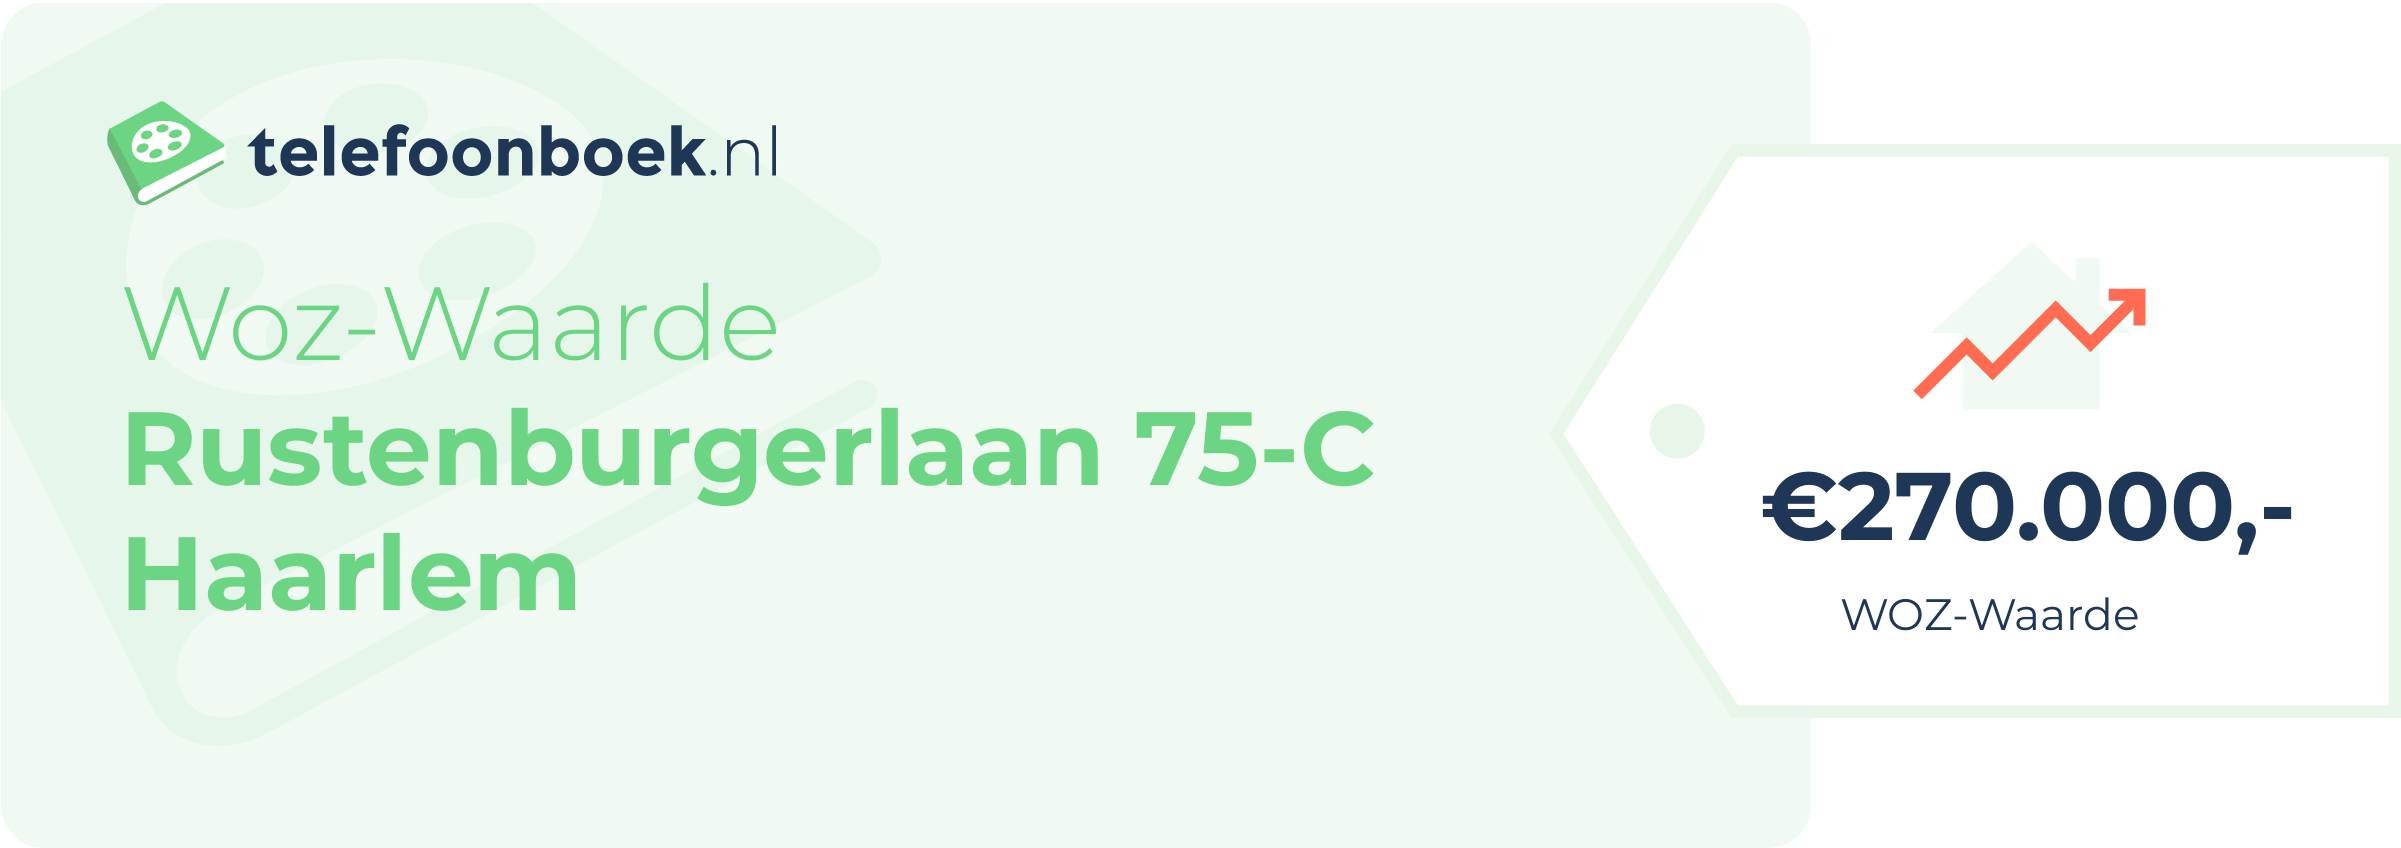 WOZ-waarde Rustenburgerlaan 75-C Haarlem